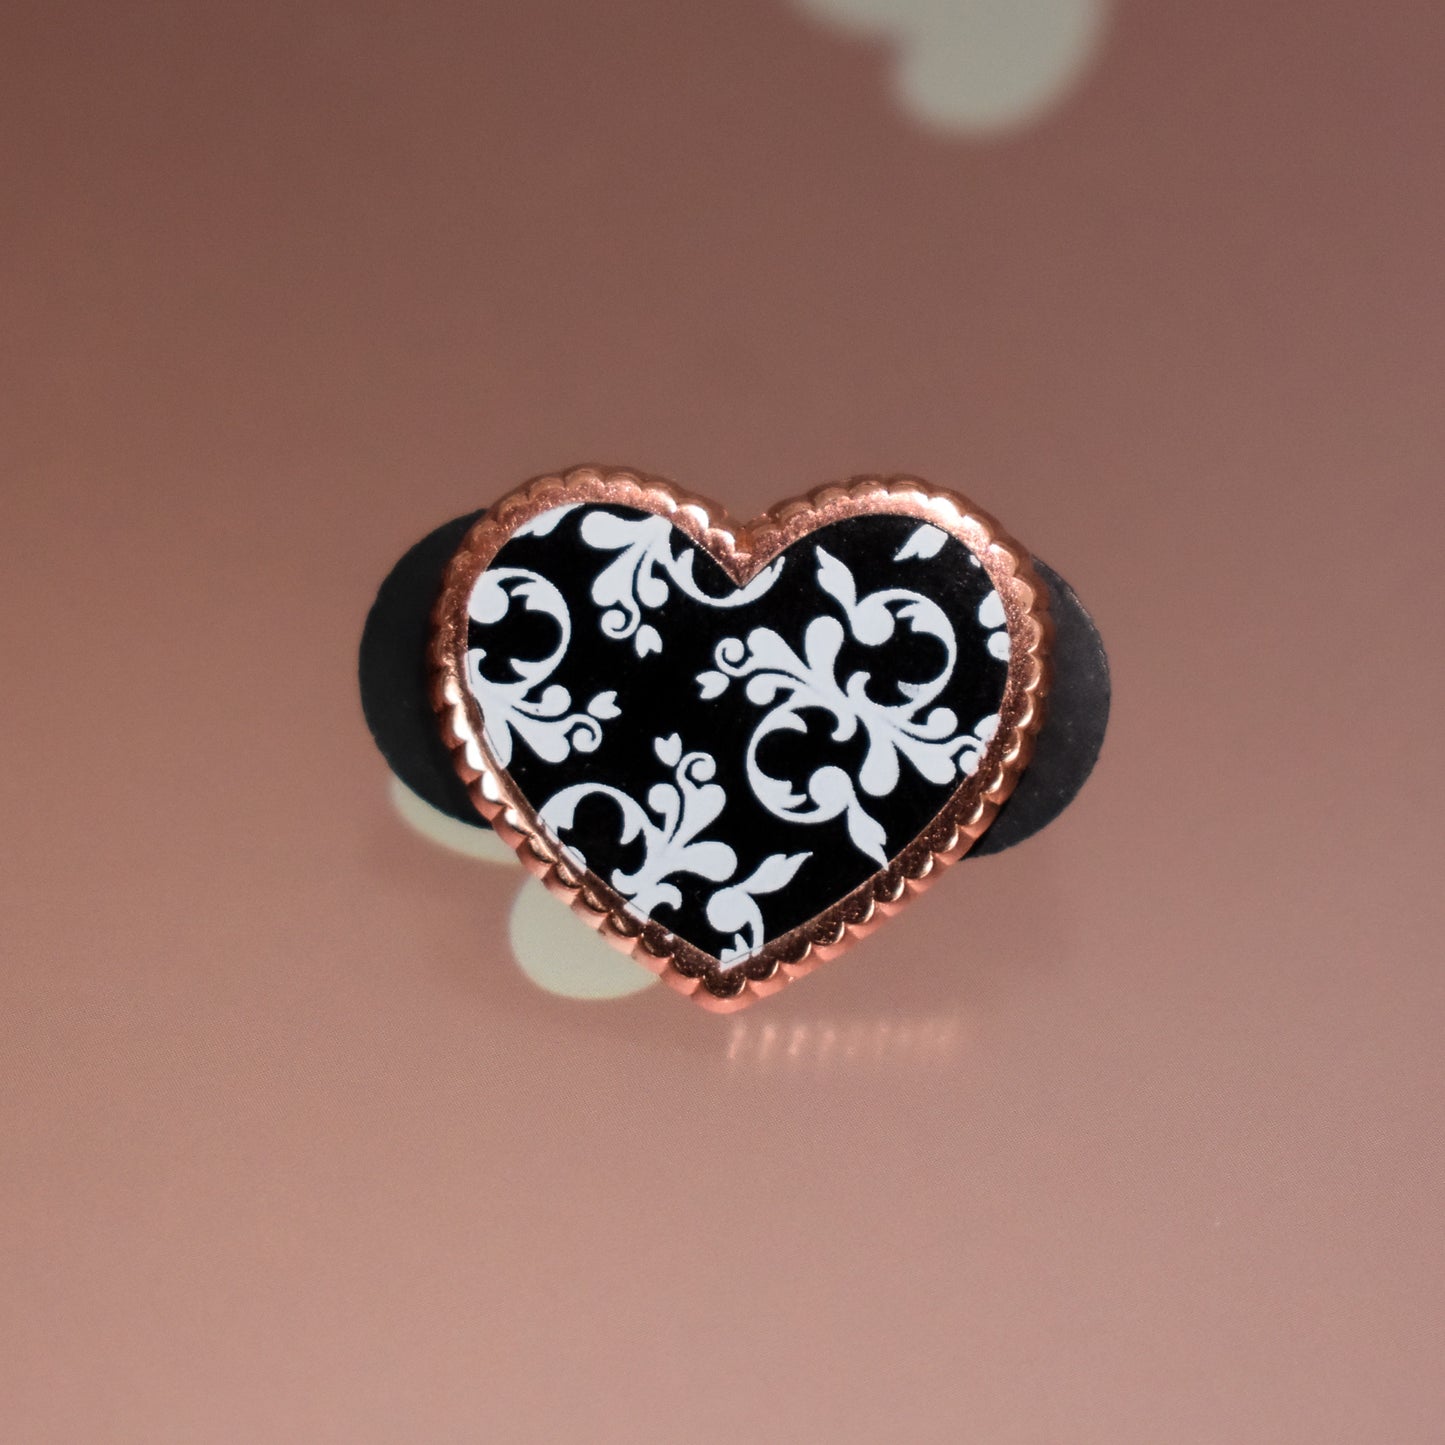 Rose Gold Monochrome Heart Pin